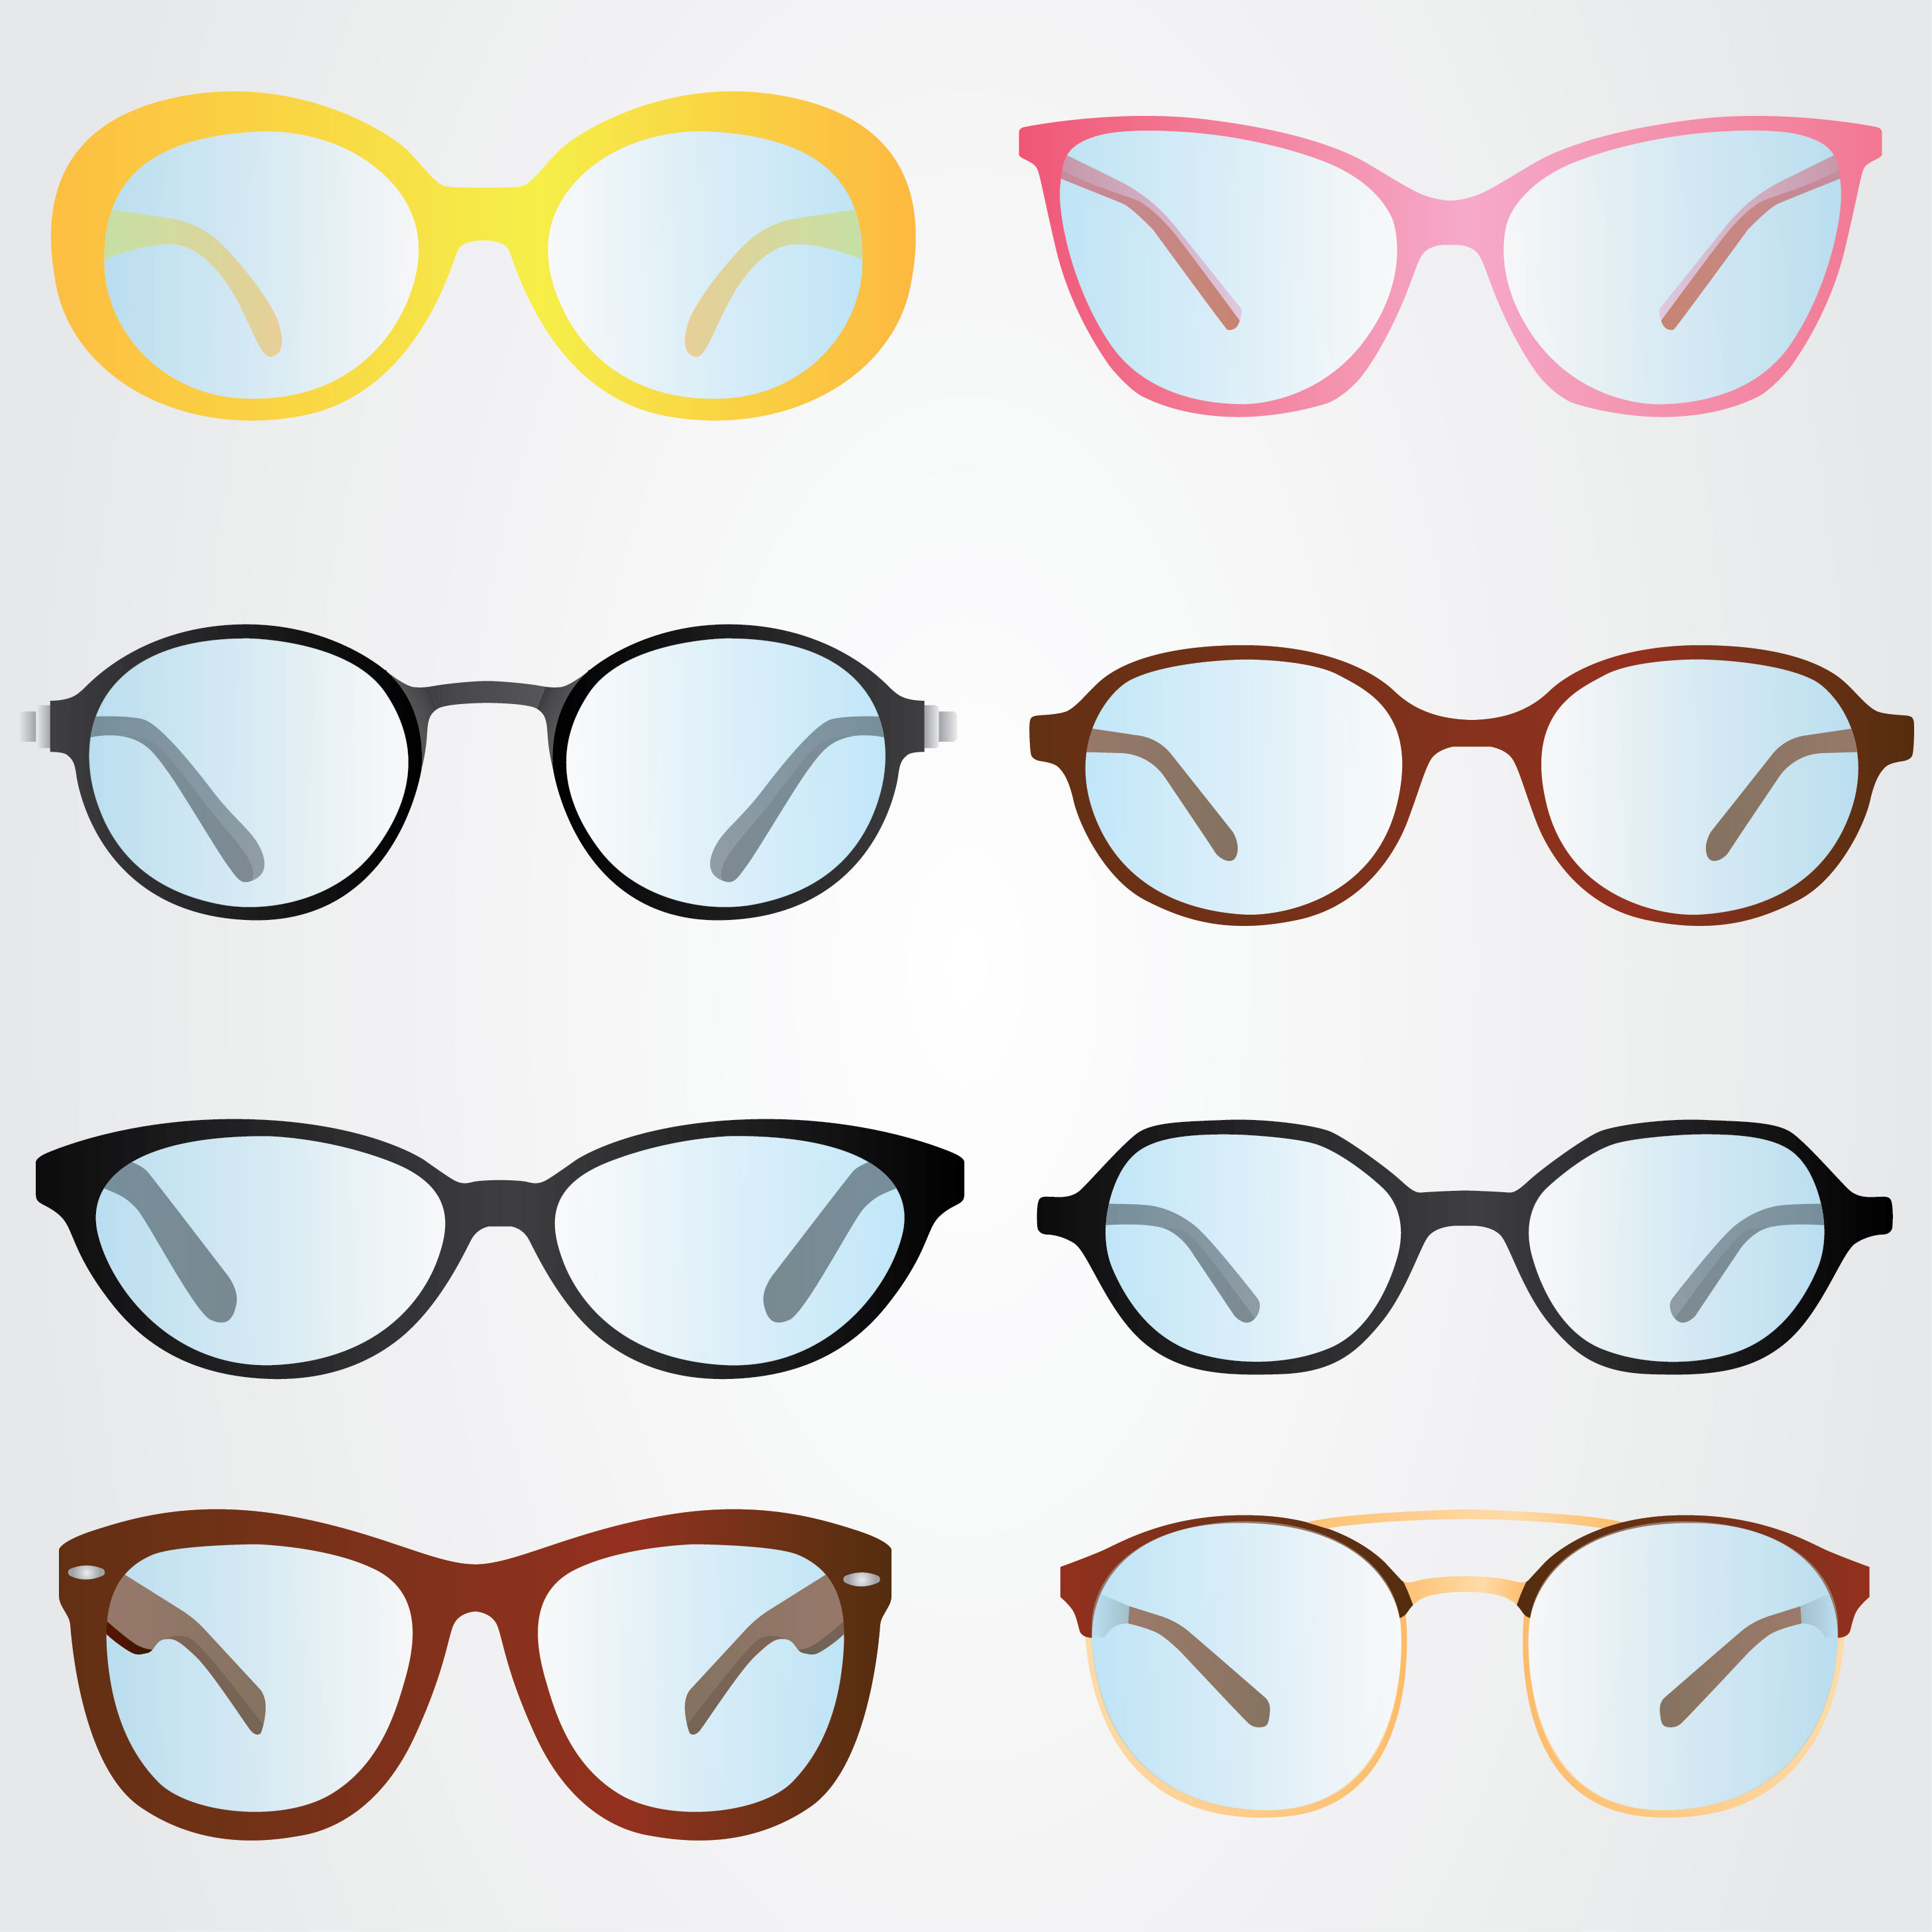 Eyeglasses Free Vector Art 6066 Free Downloads 